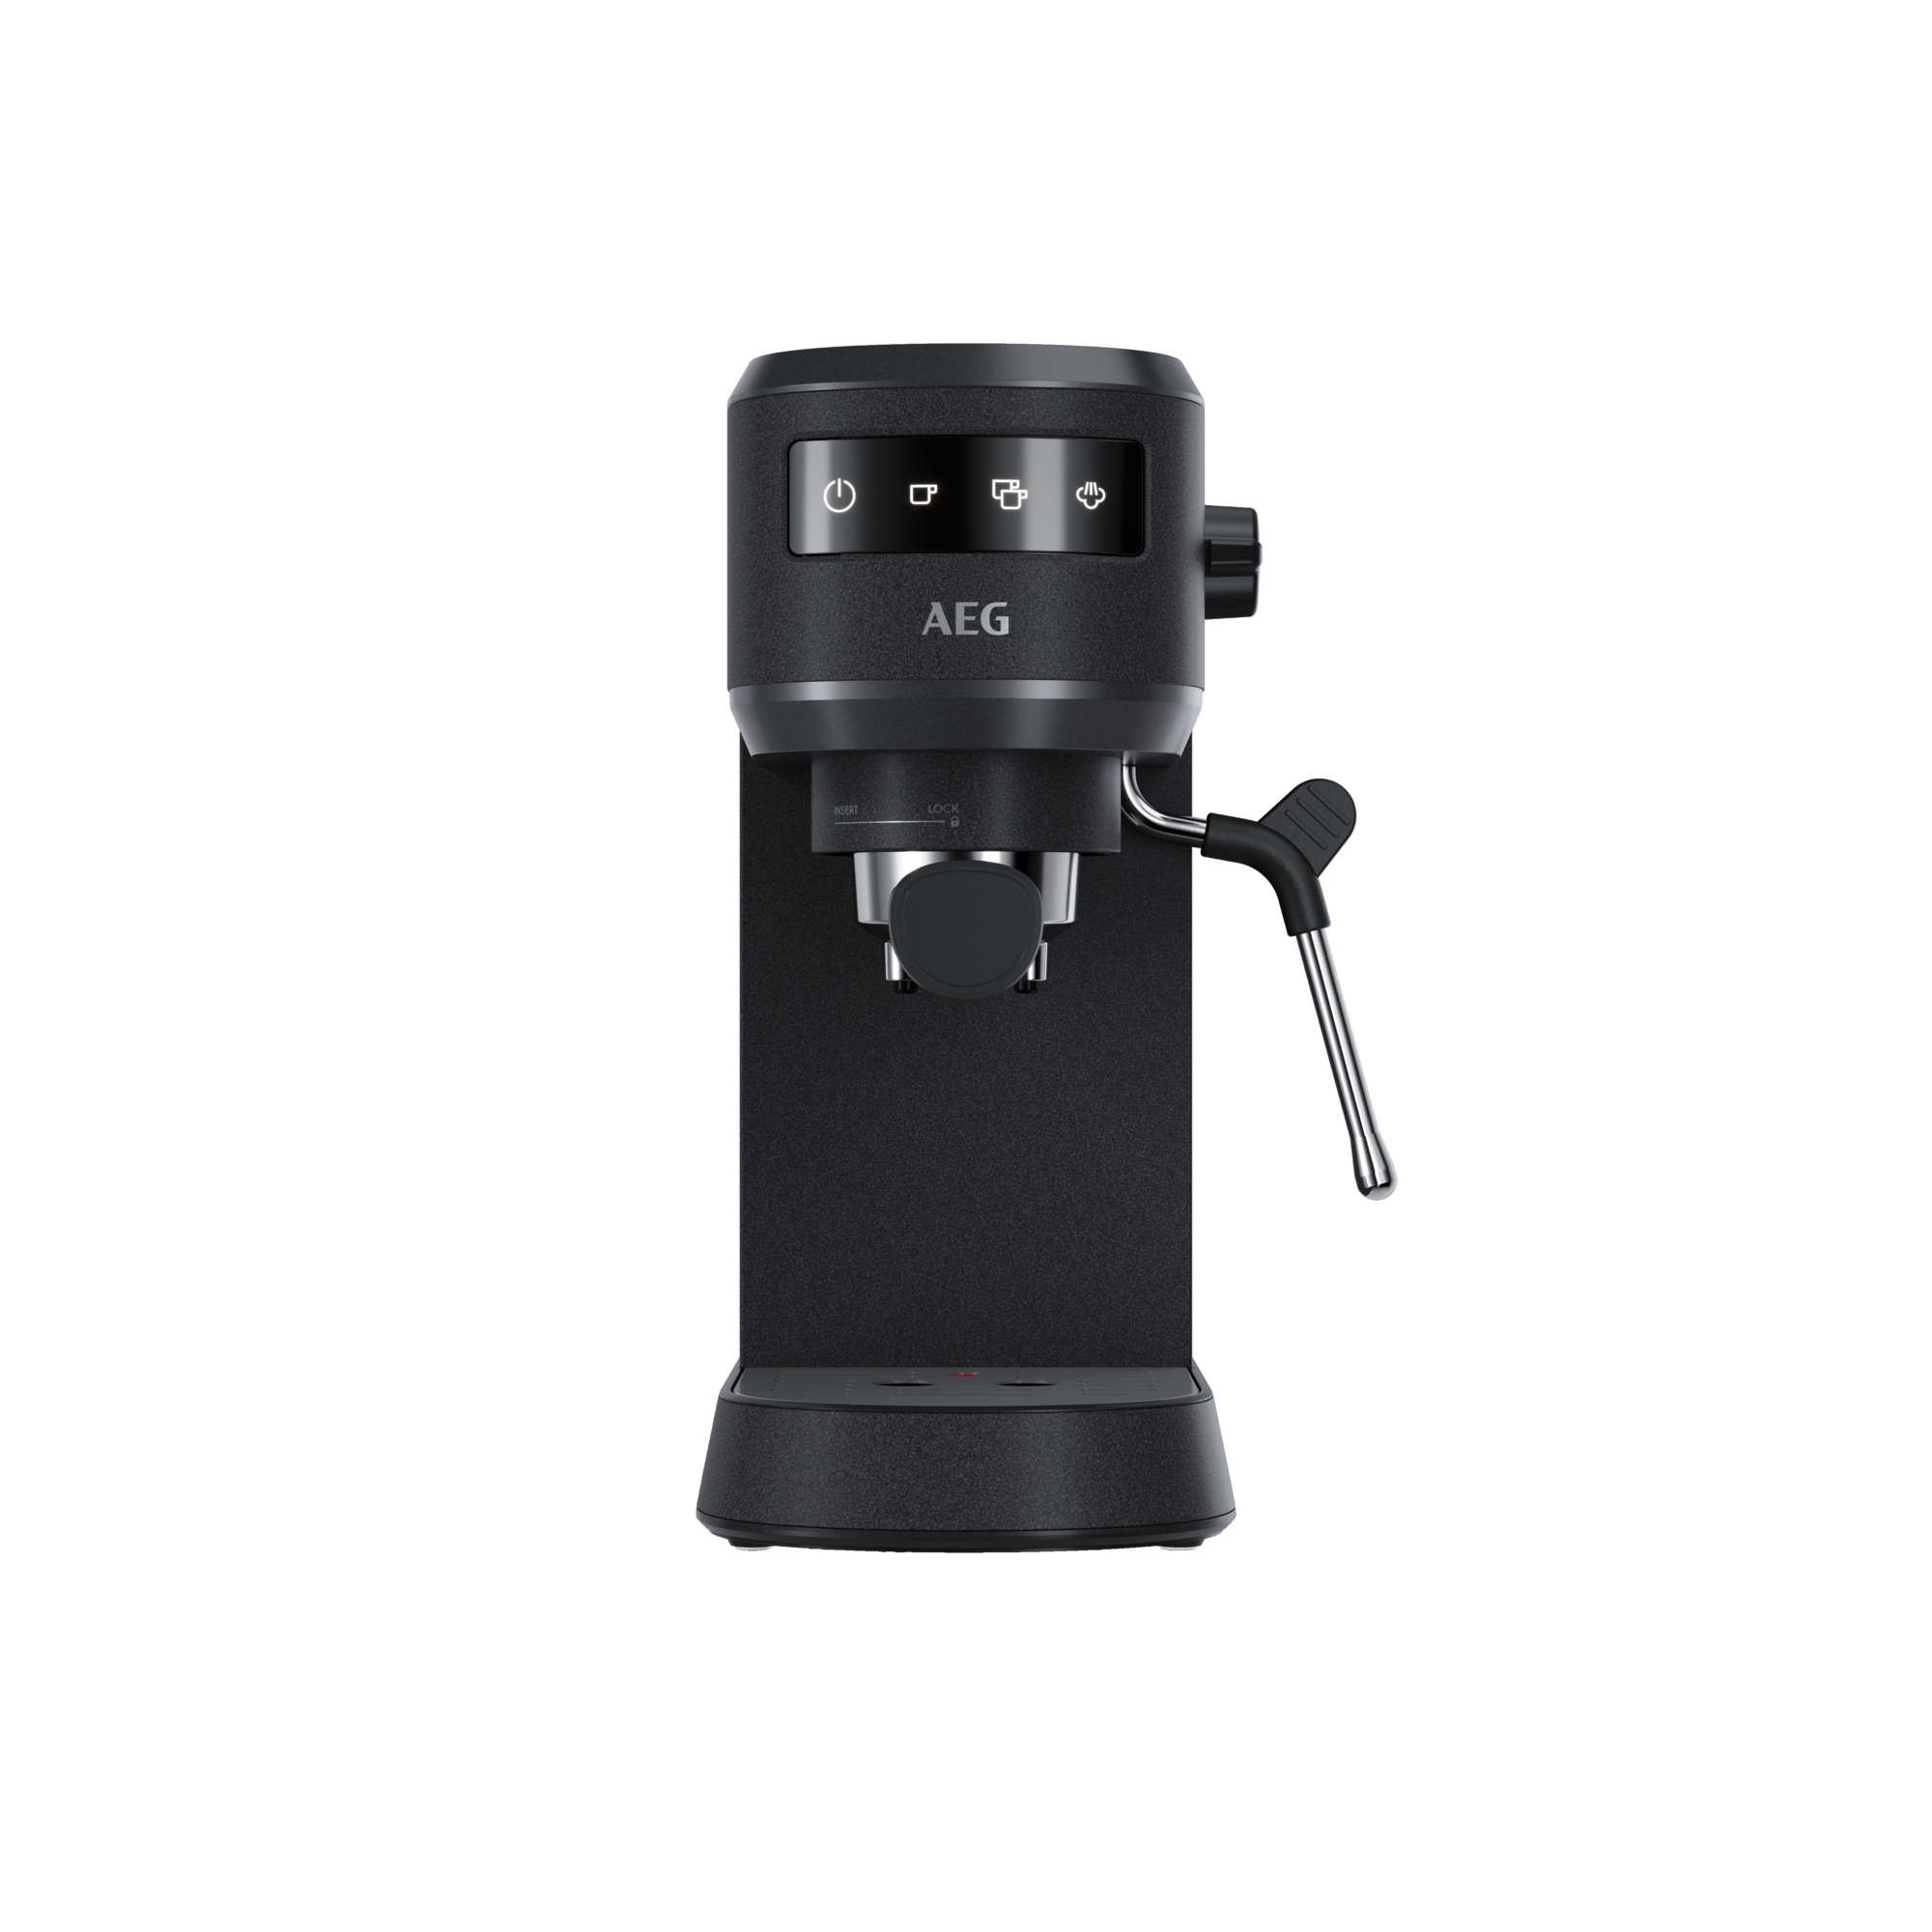 6 Pearl EC6-1-6BST Black Pearl Black AEG Gourmet Siebträgermaschine Espressomaschine Espresso